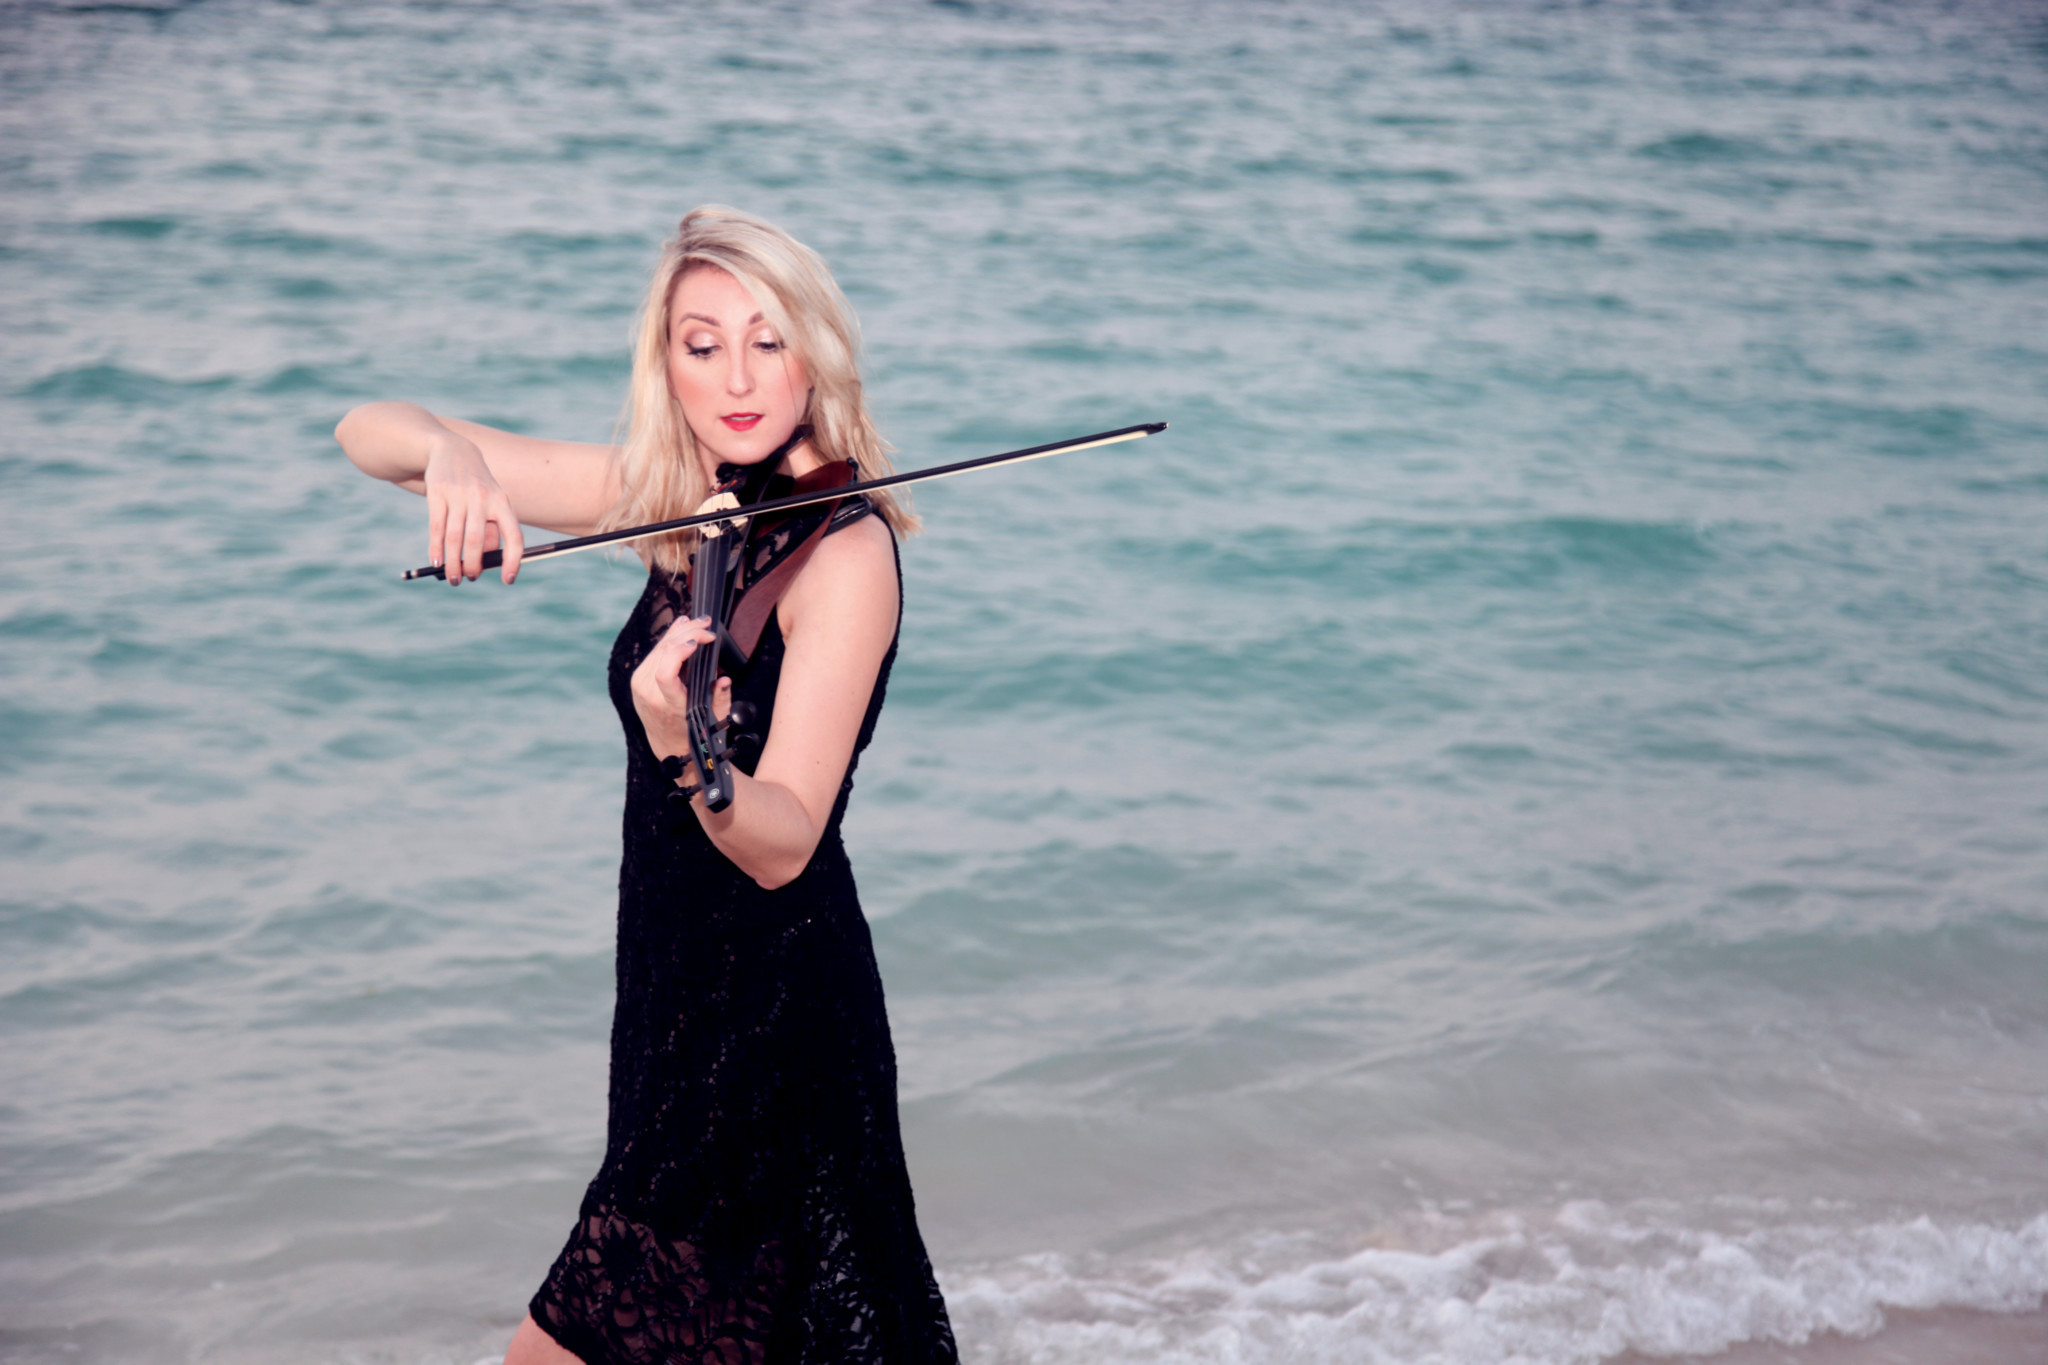 Classical Violin Player in Dubai on beach